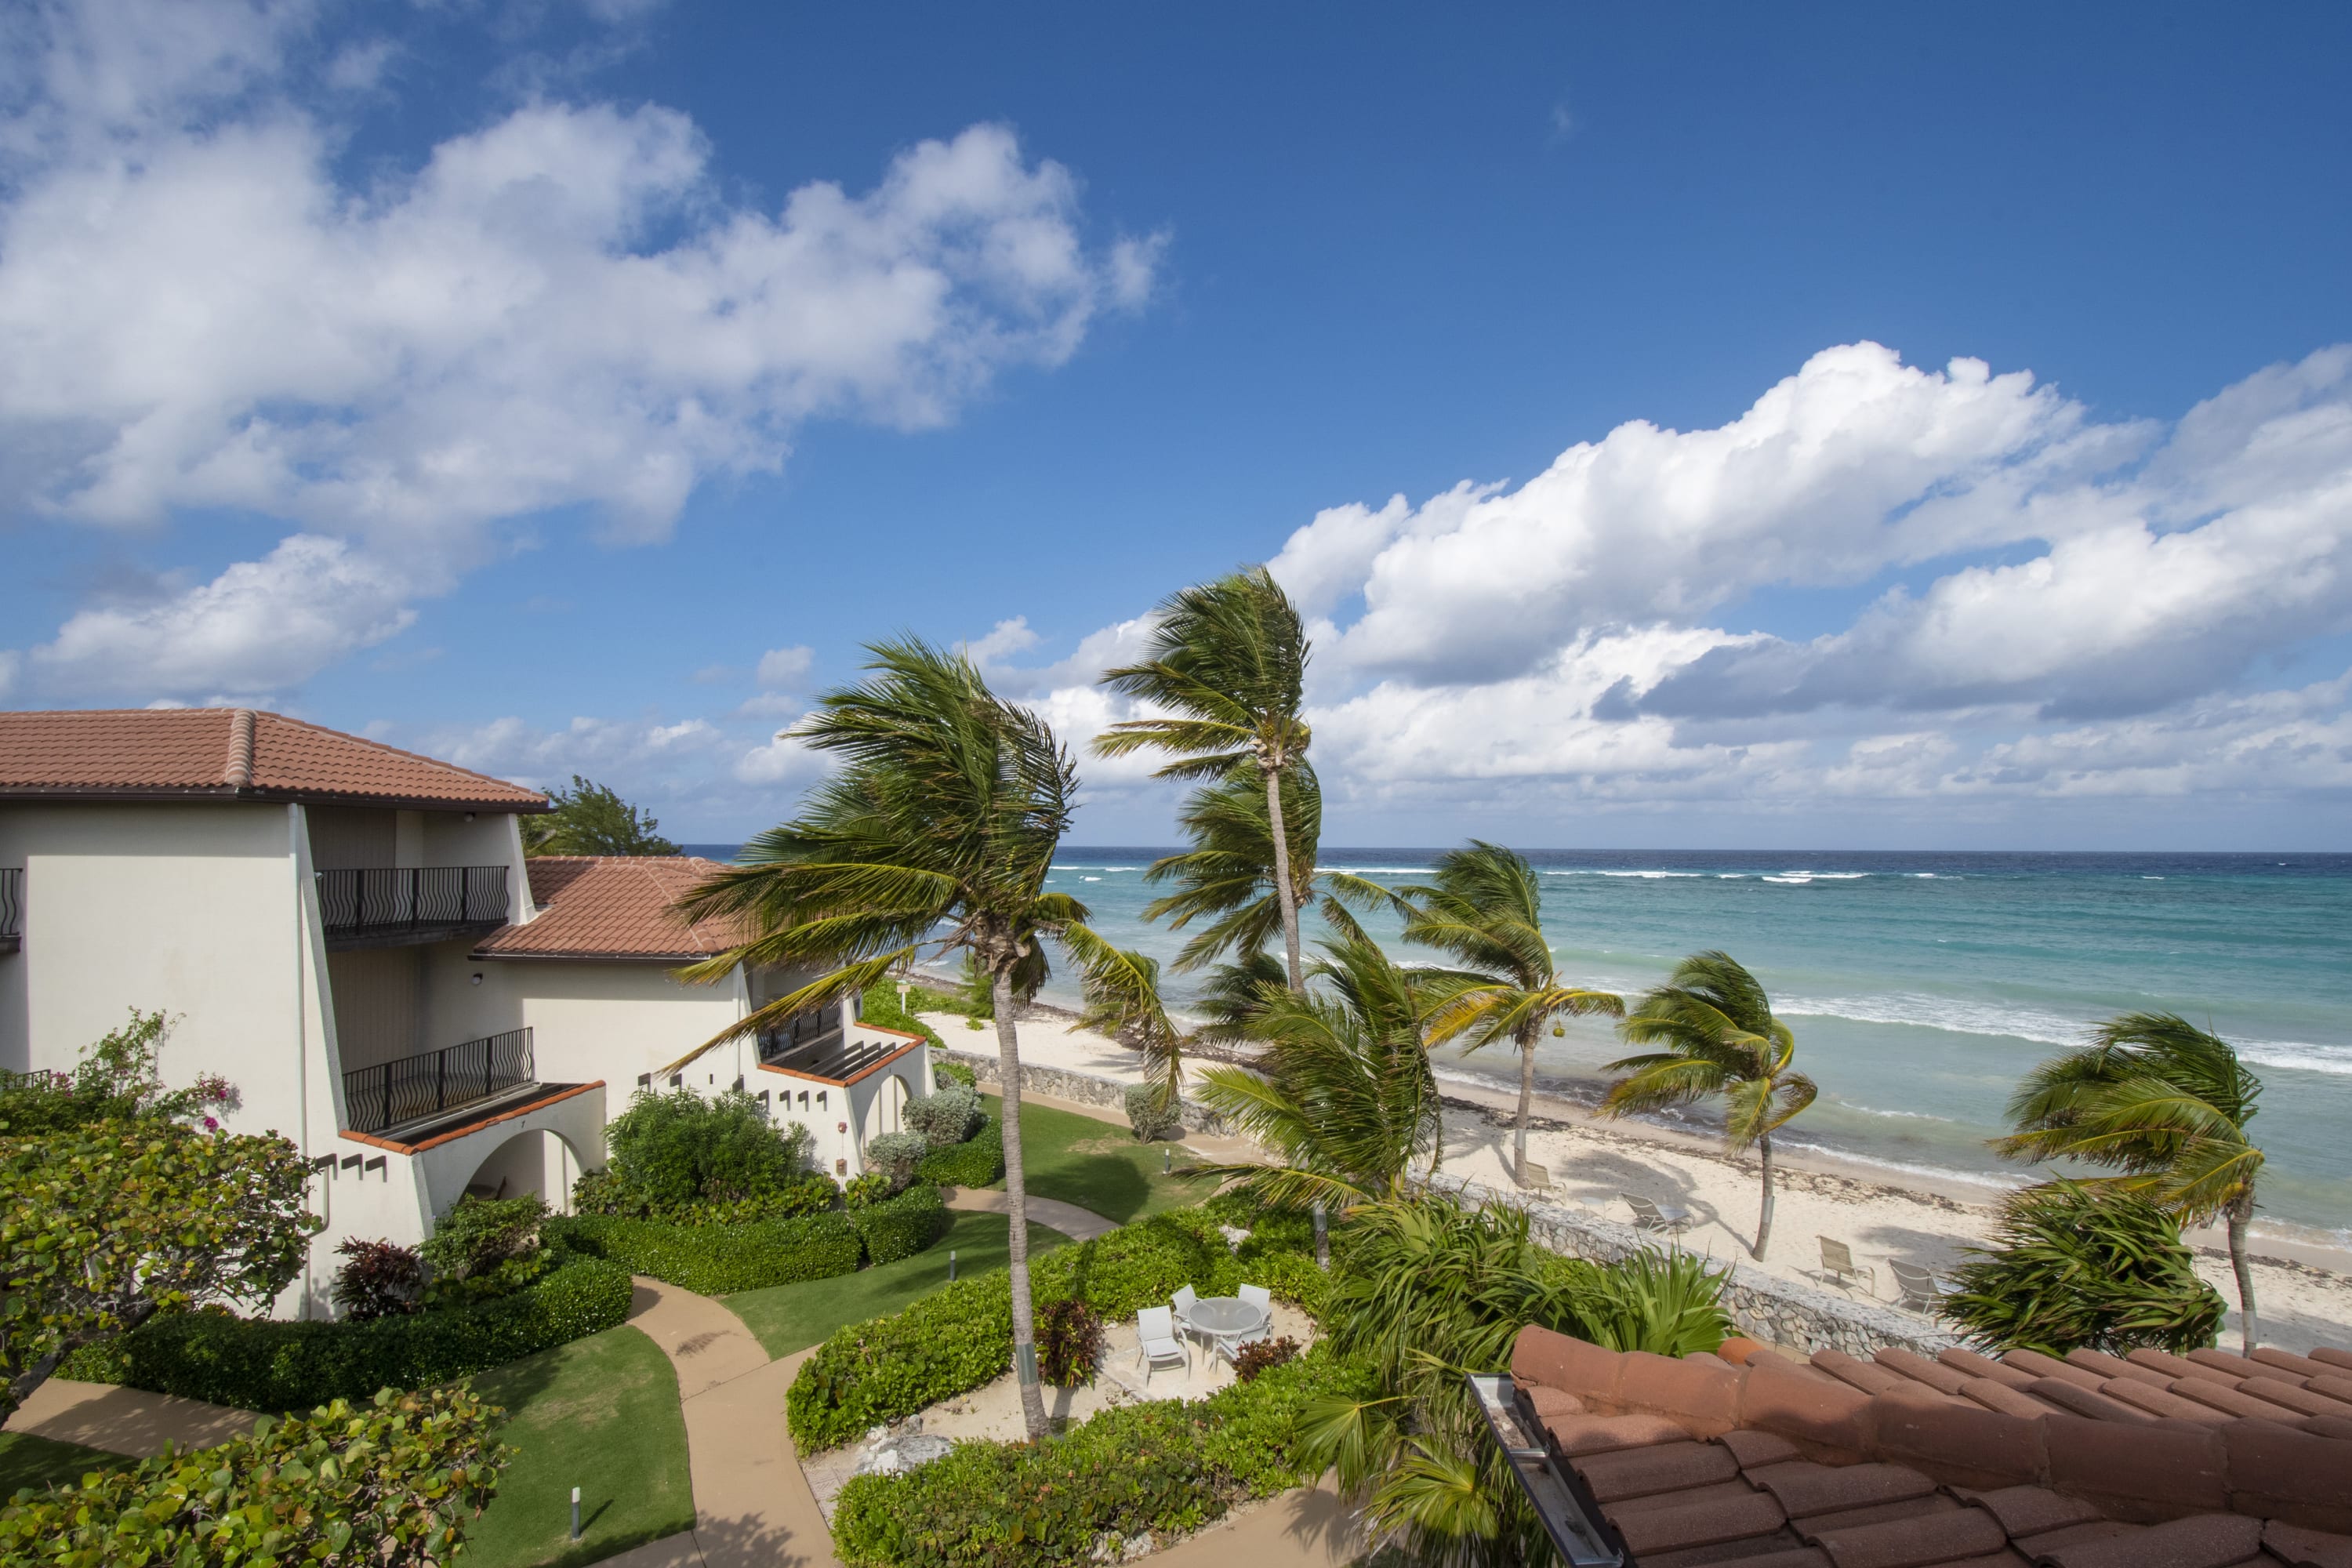 Vacation rental cayman islands